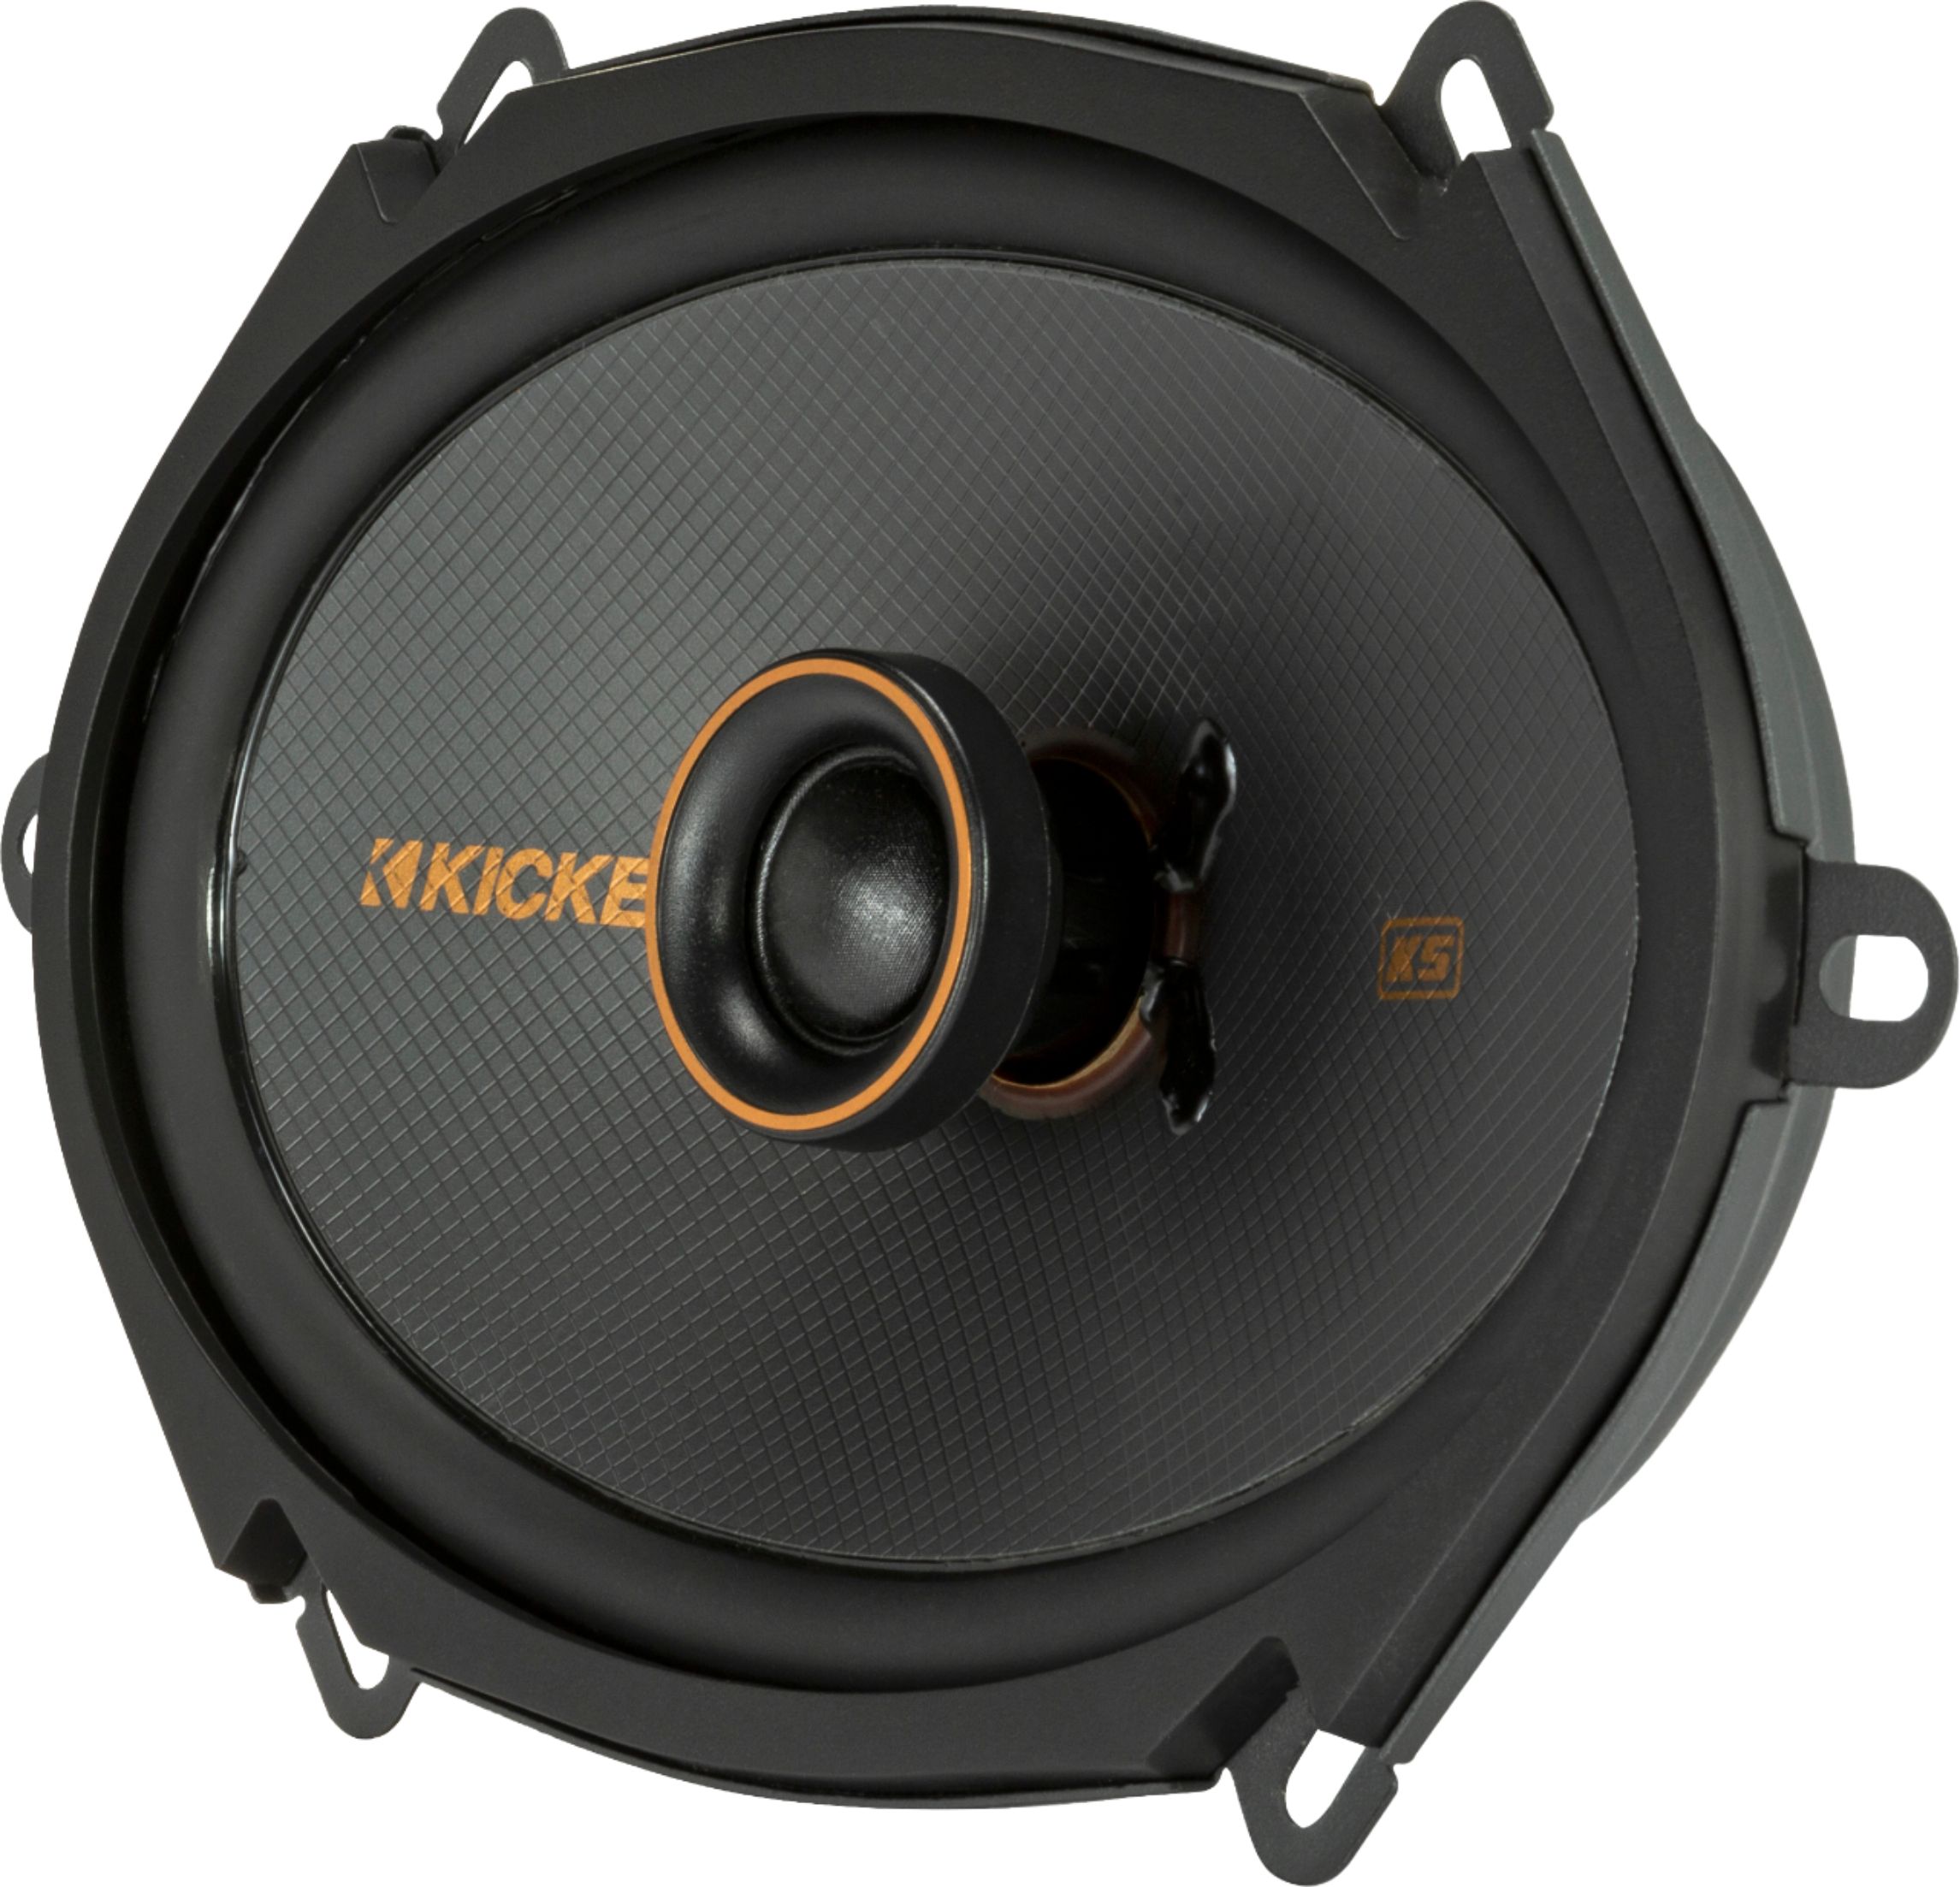 Left View: KICKER - KS Series 6" x 8" 2-Way Car Speakers with Polypropylene Cones (Pair) - Black